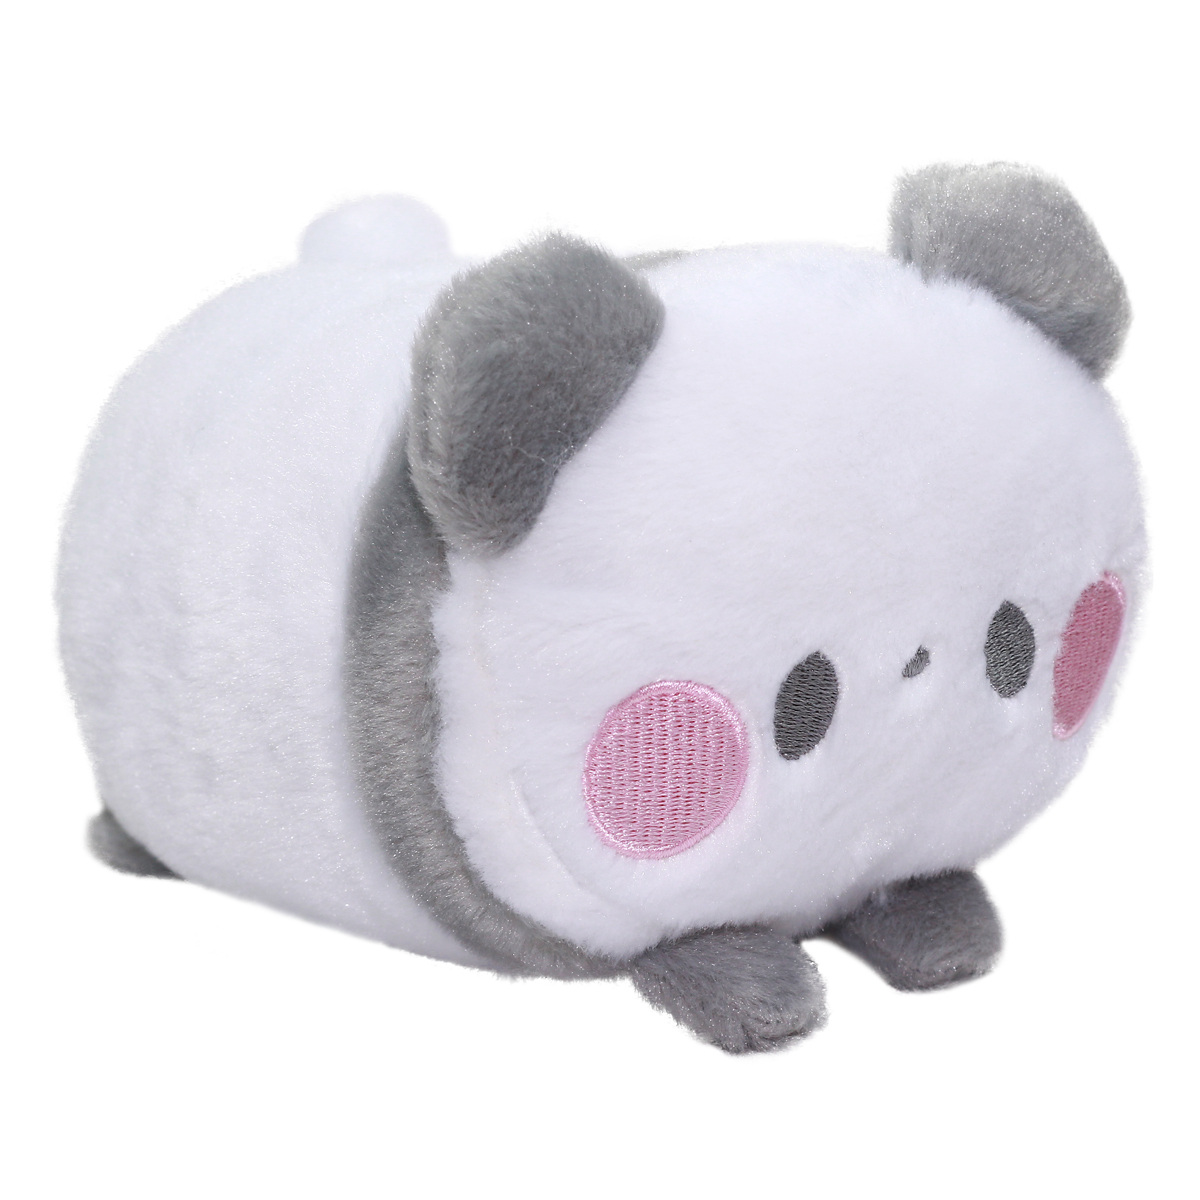 squishy panda toy